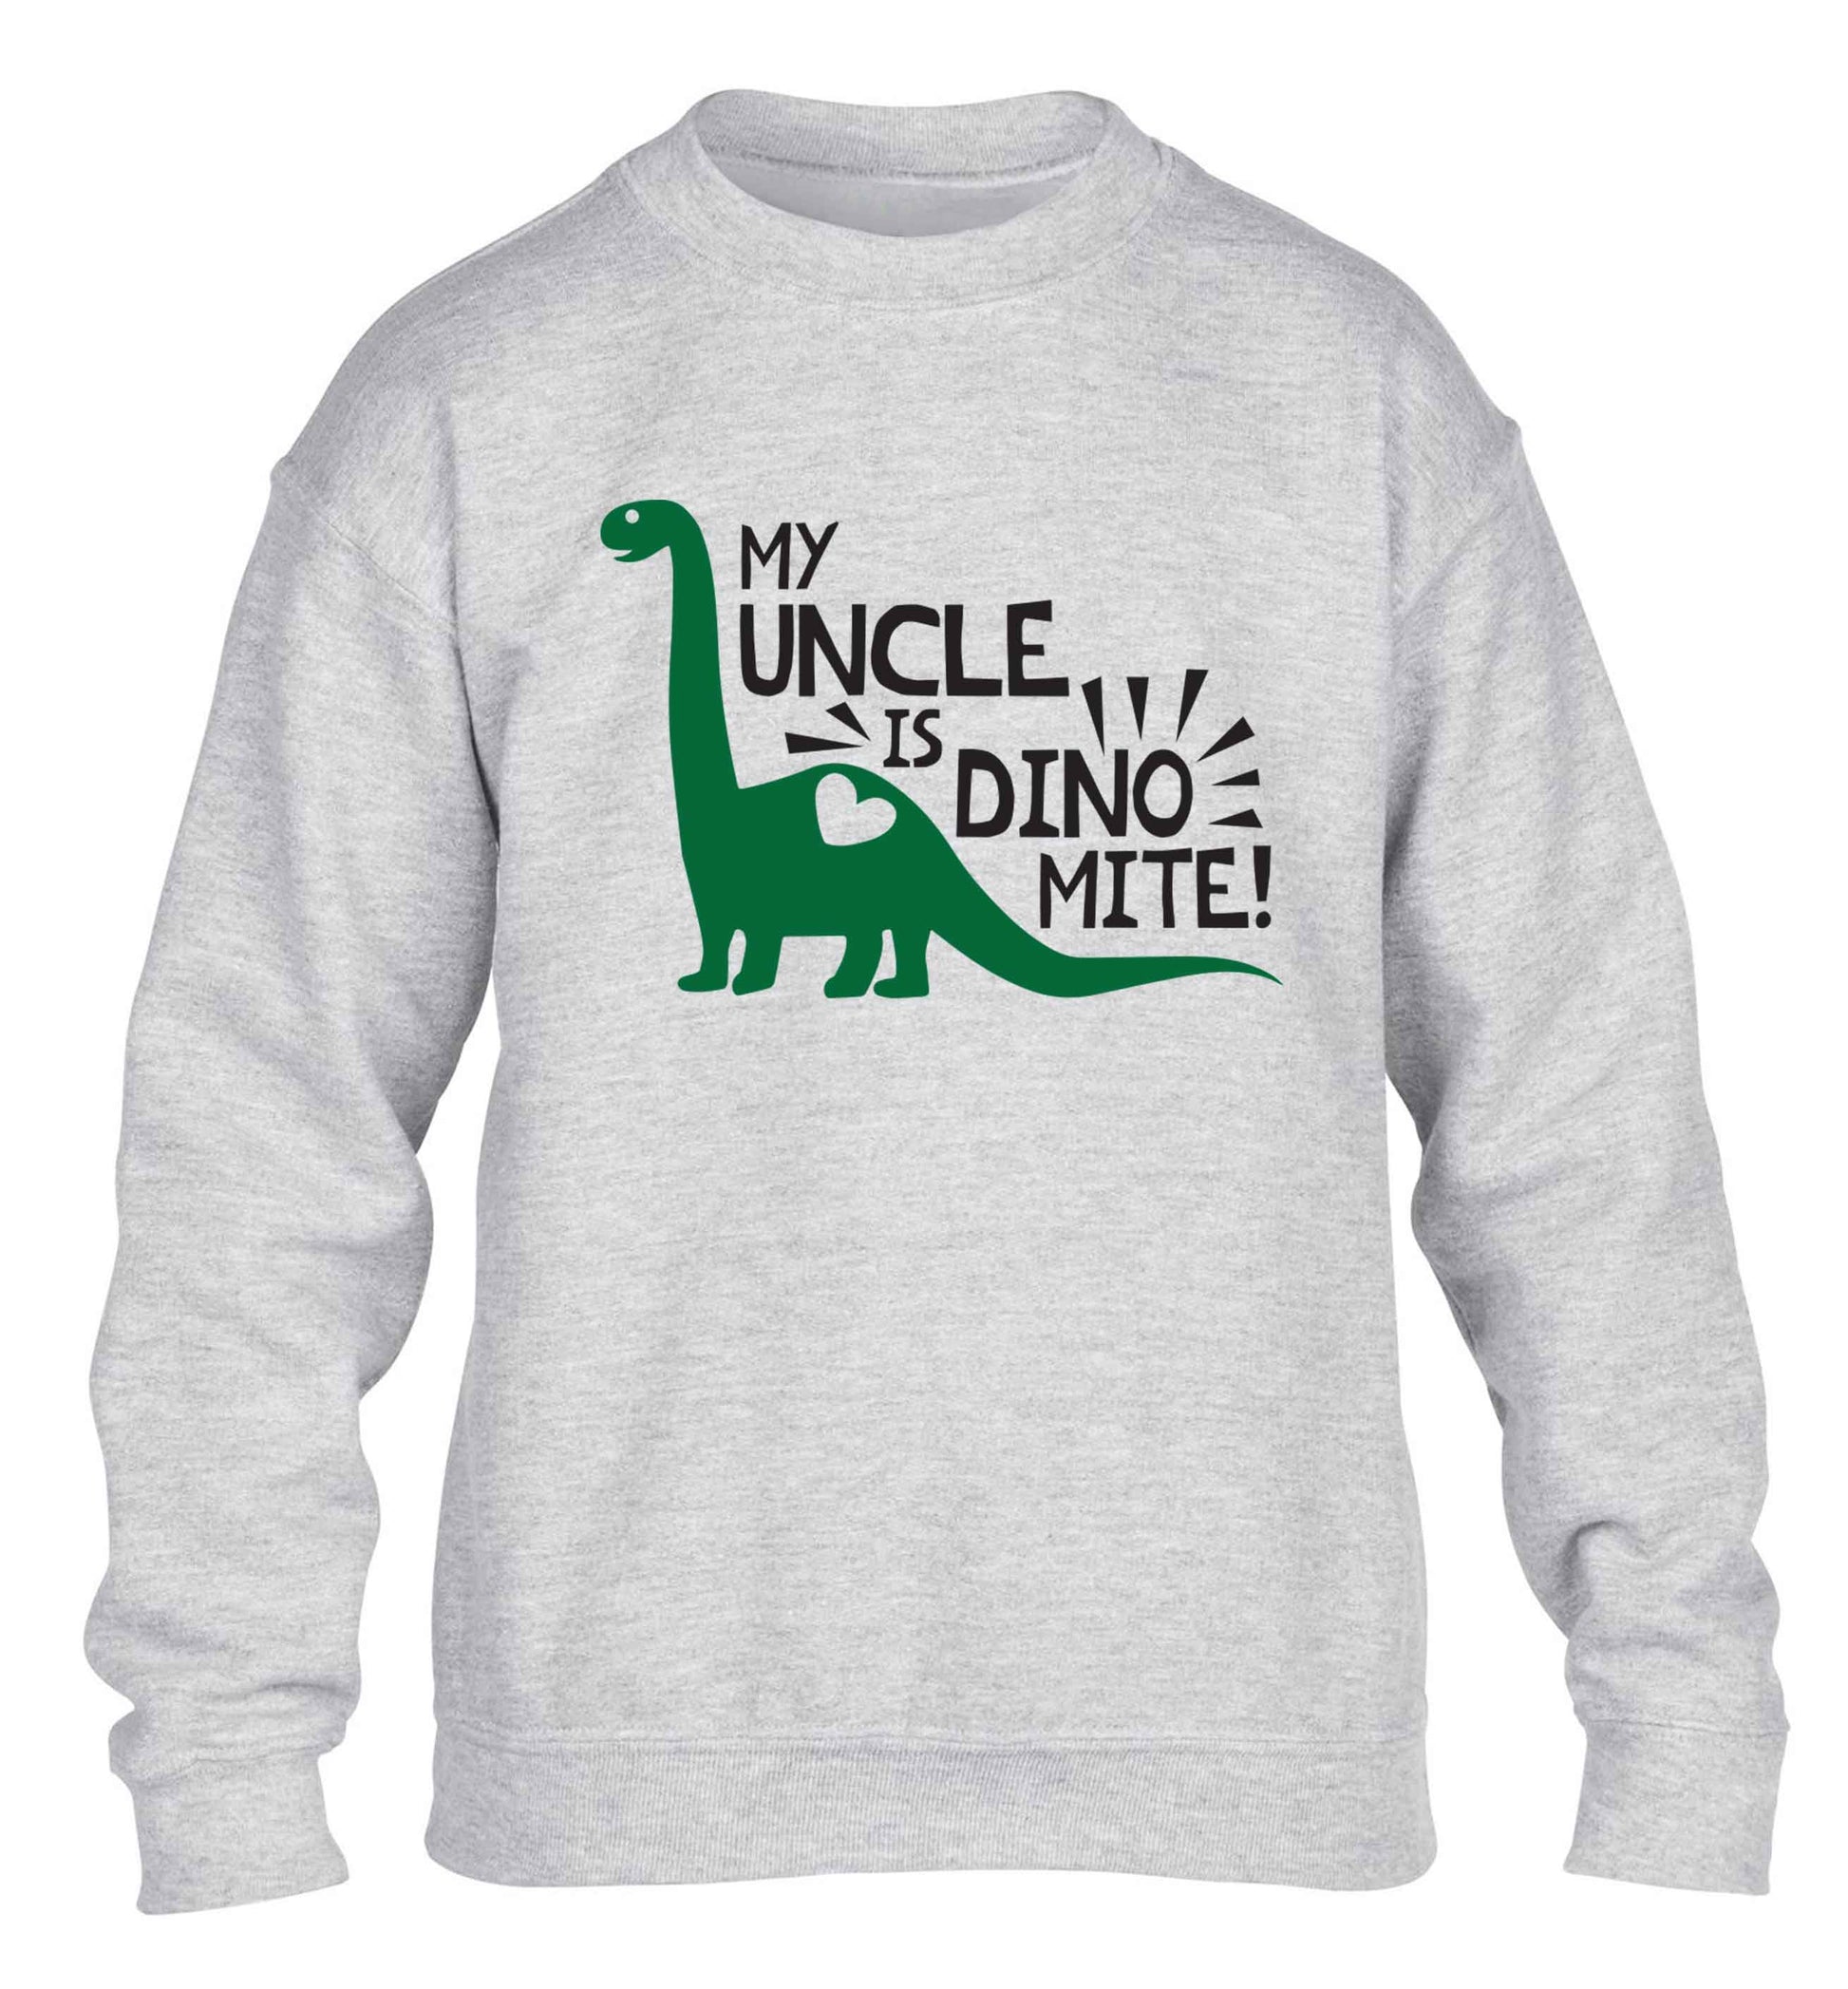 My uncle is dinomite! children's grey sweater 12-13 Years